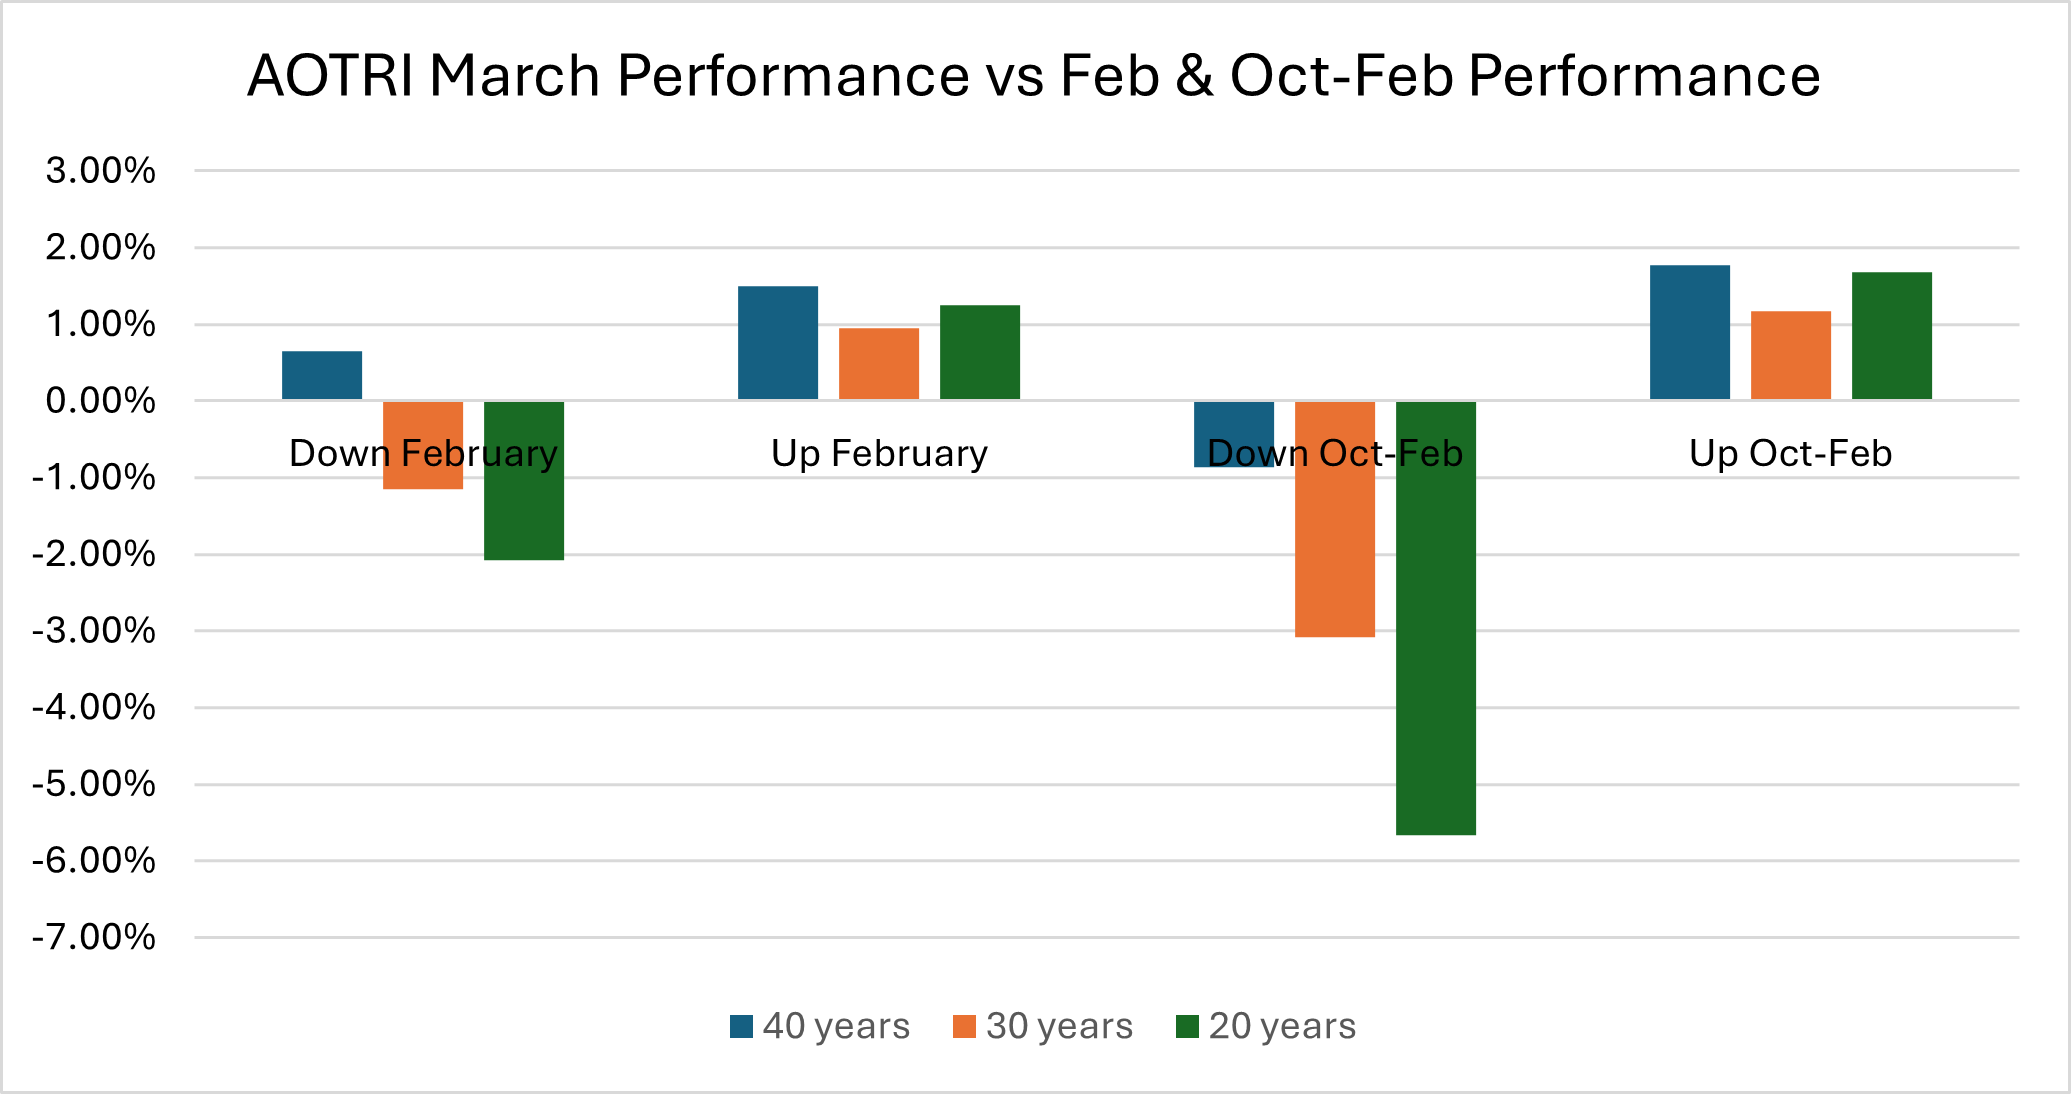 5. AOTRI March Performance vs Feb & Oct-Feb Performance